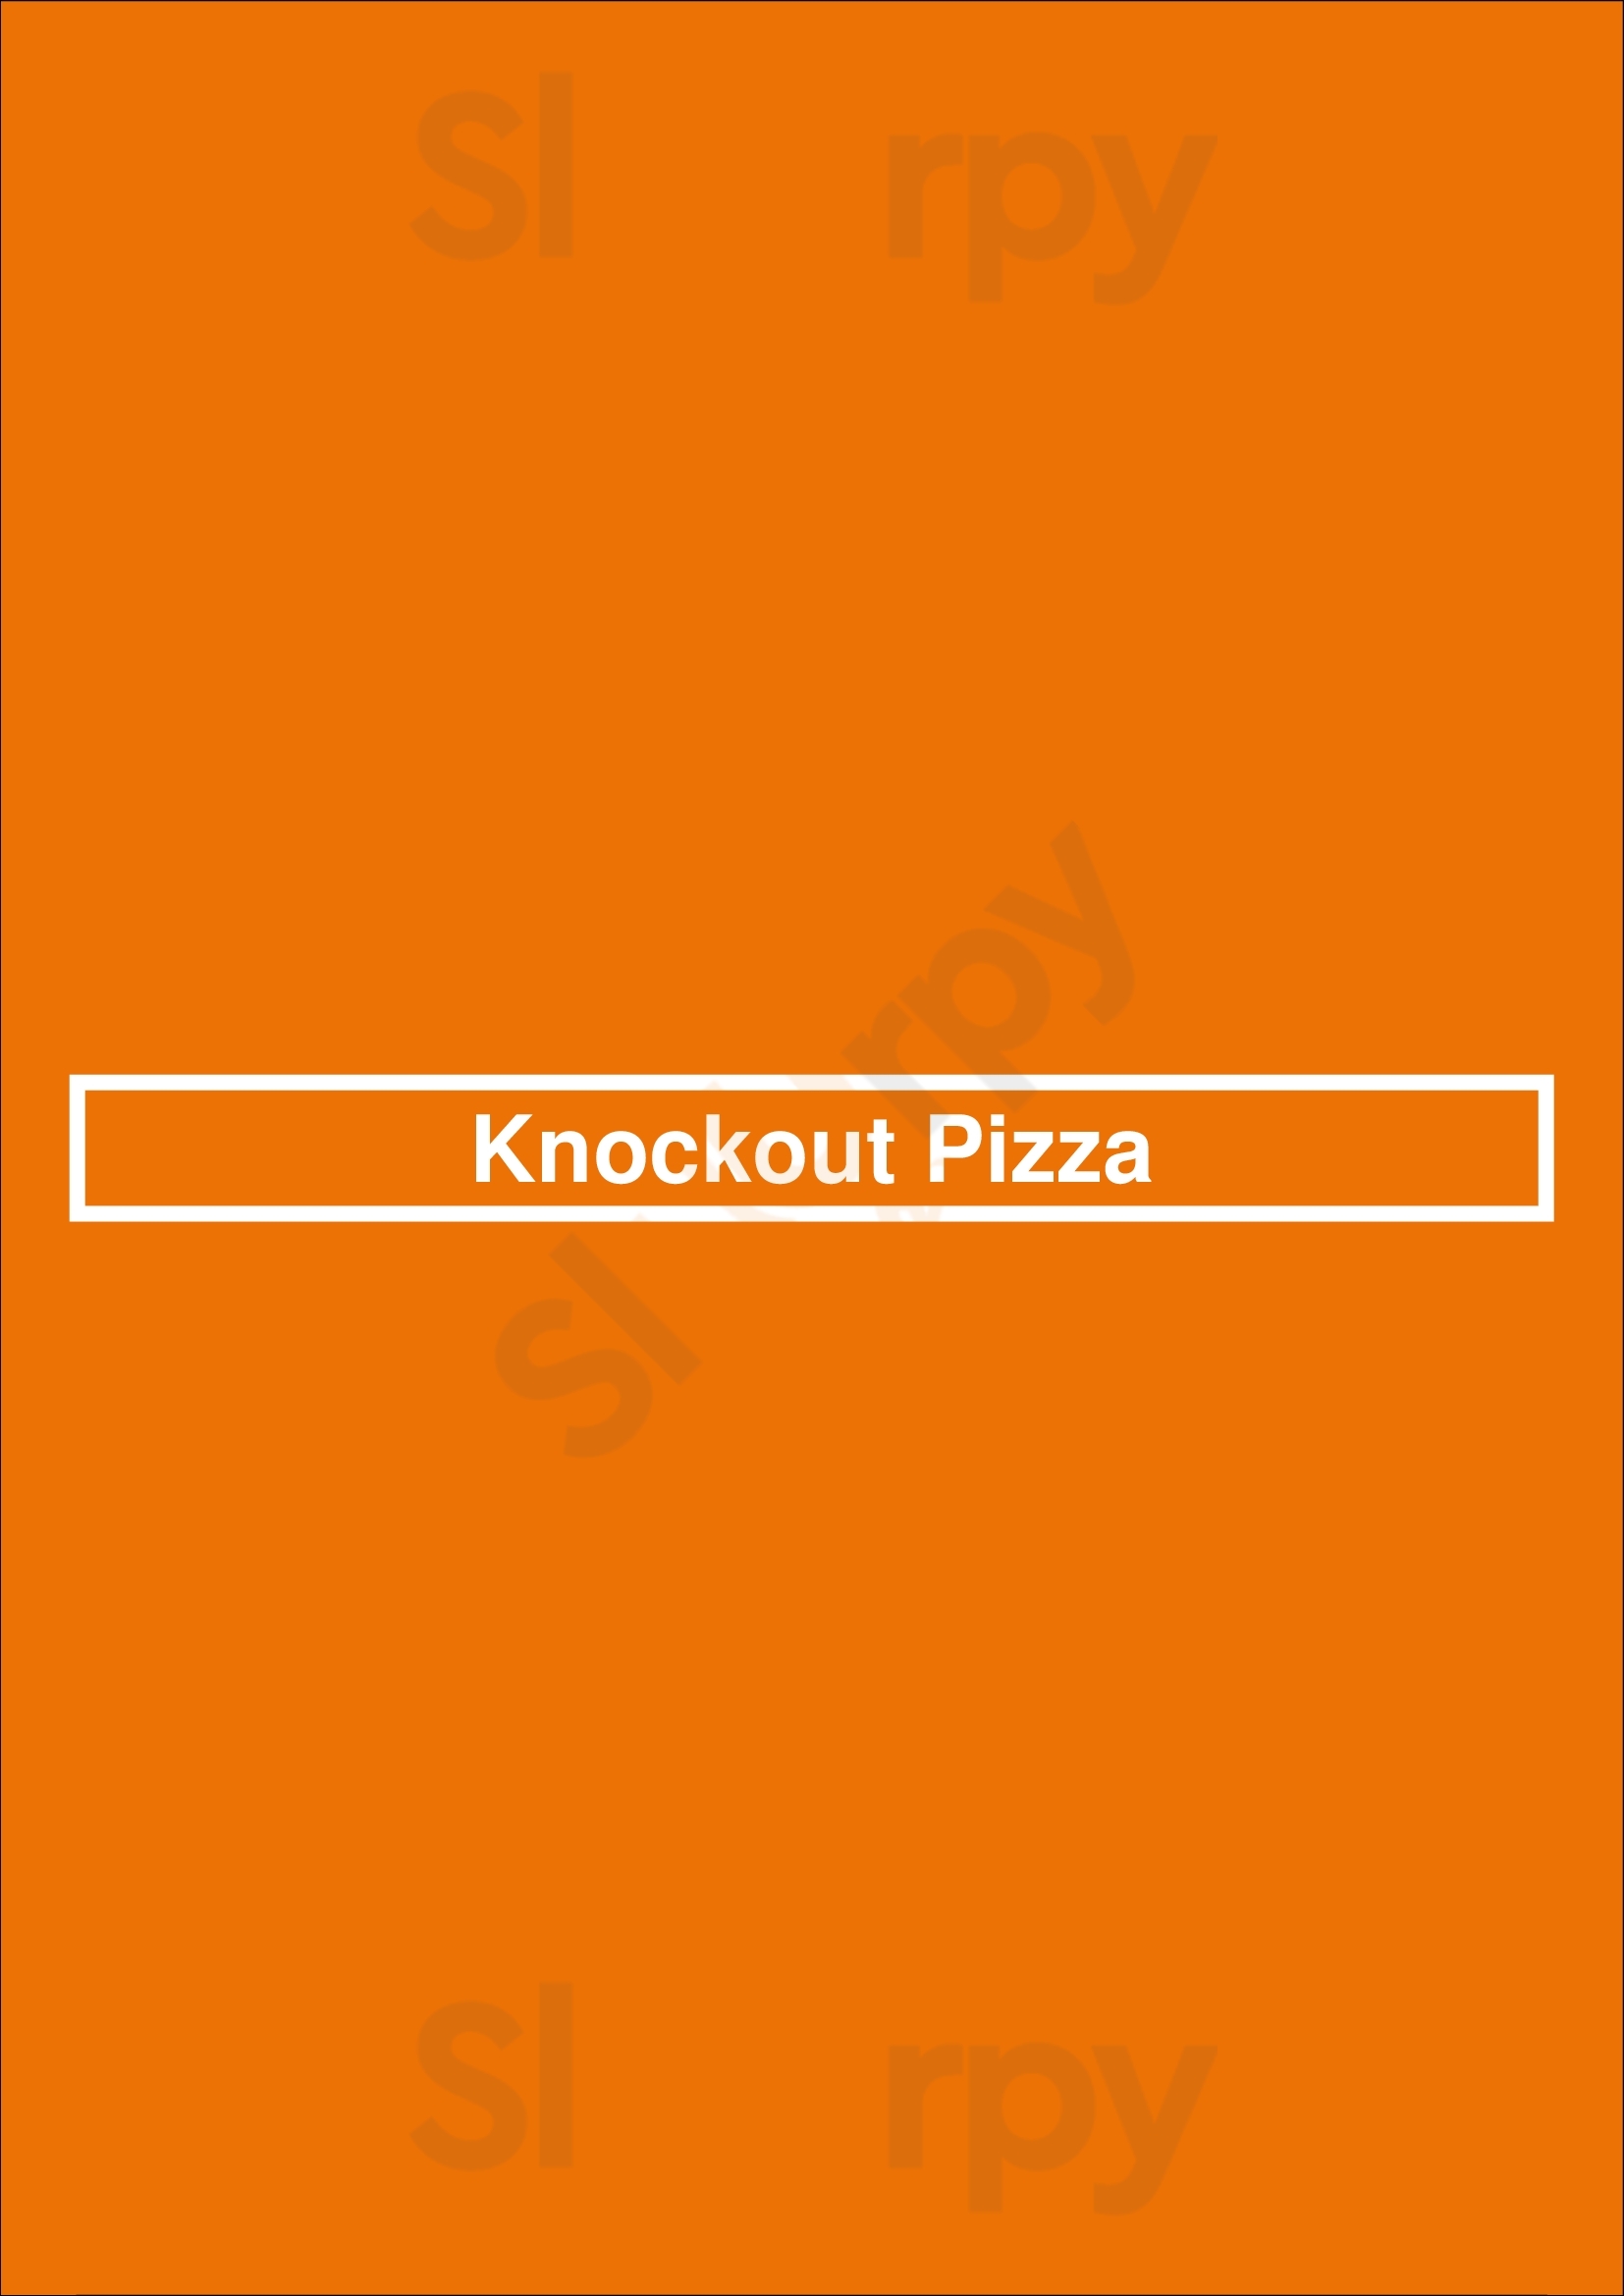 Knockout Pizza Dennis Port Menu - 1